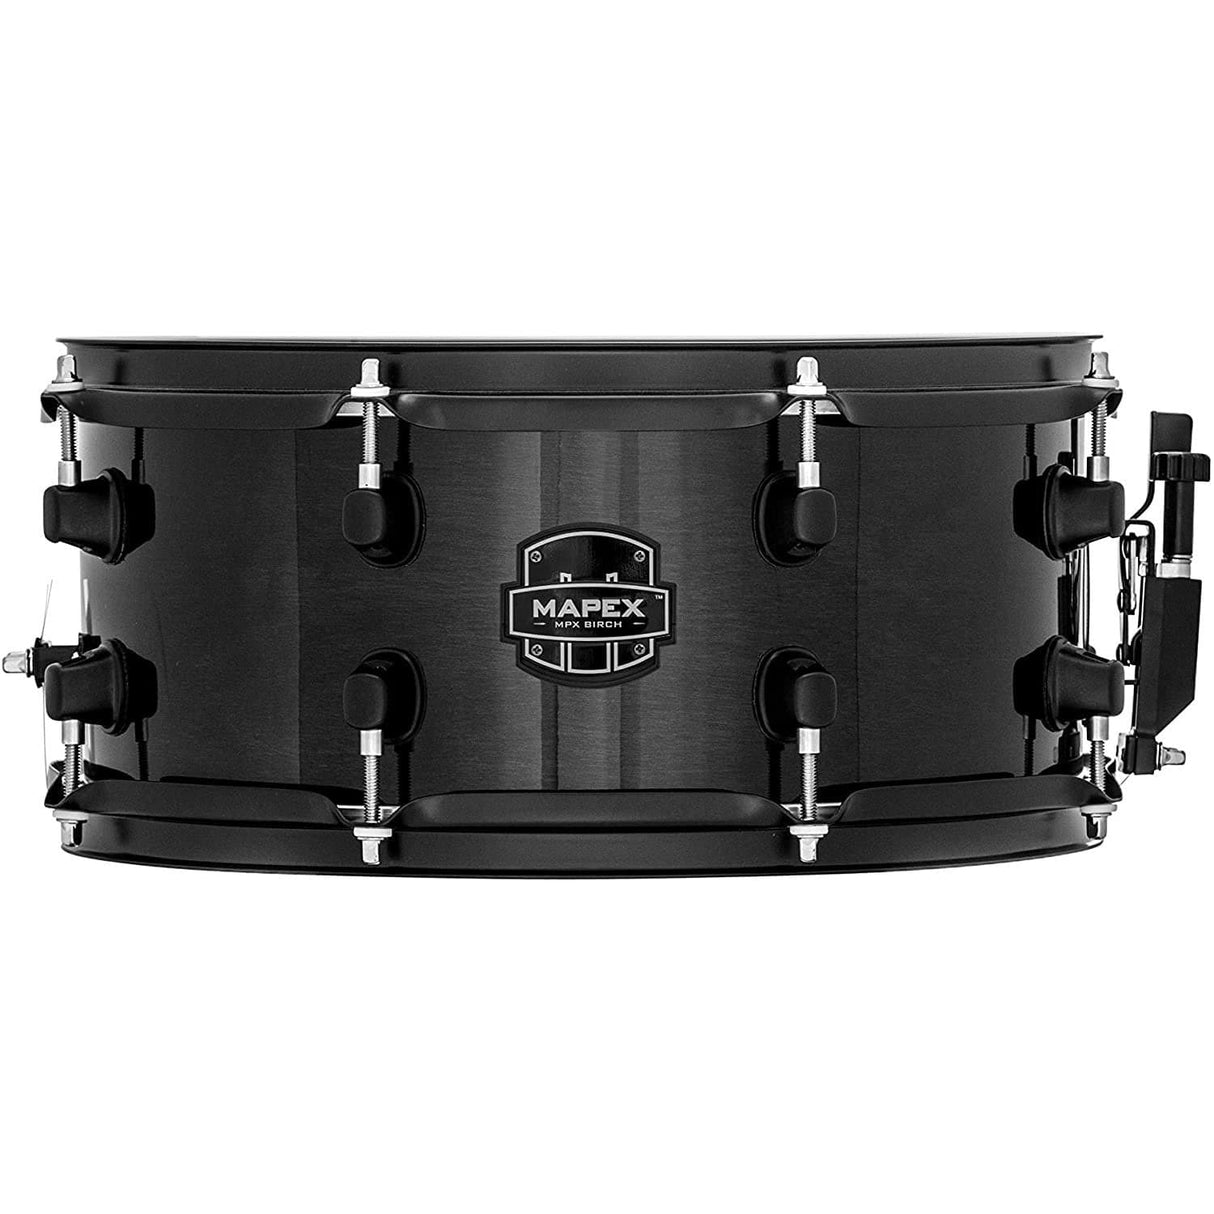 Mapex MPX Birch Snare Drum - 13x6